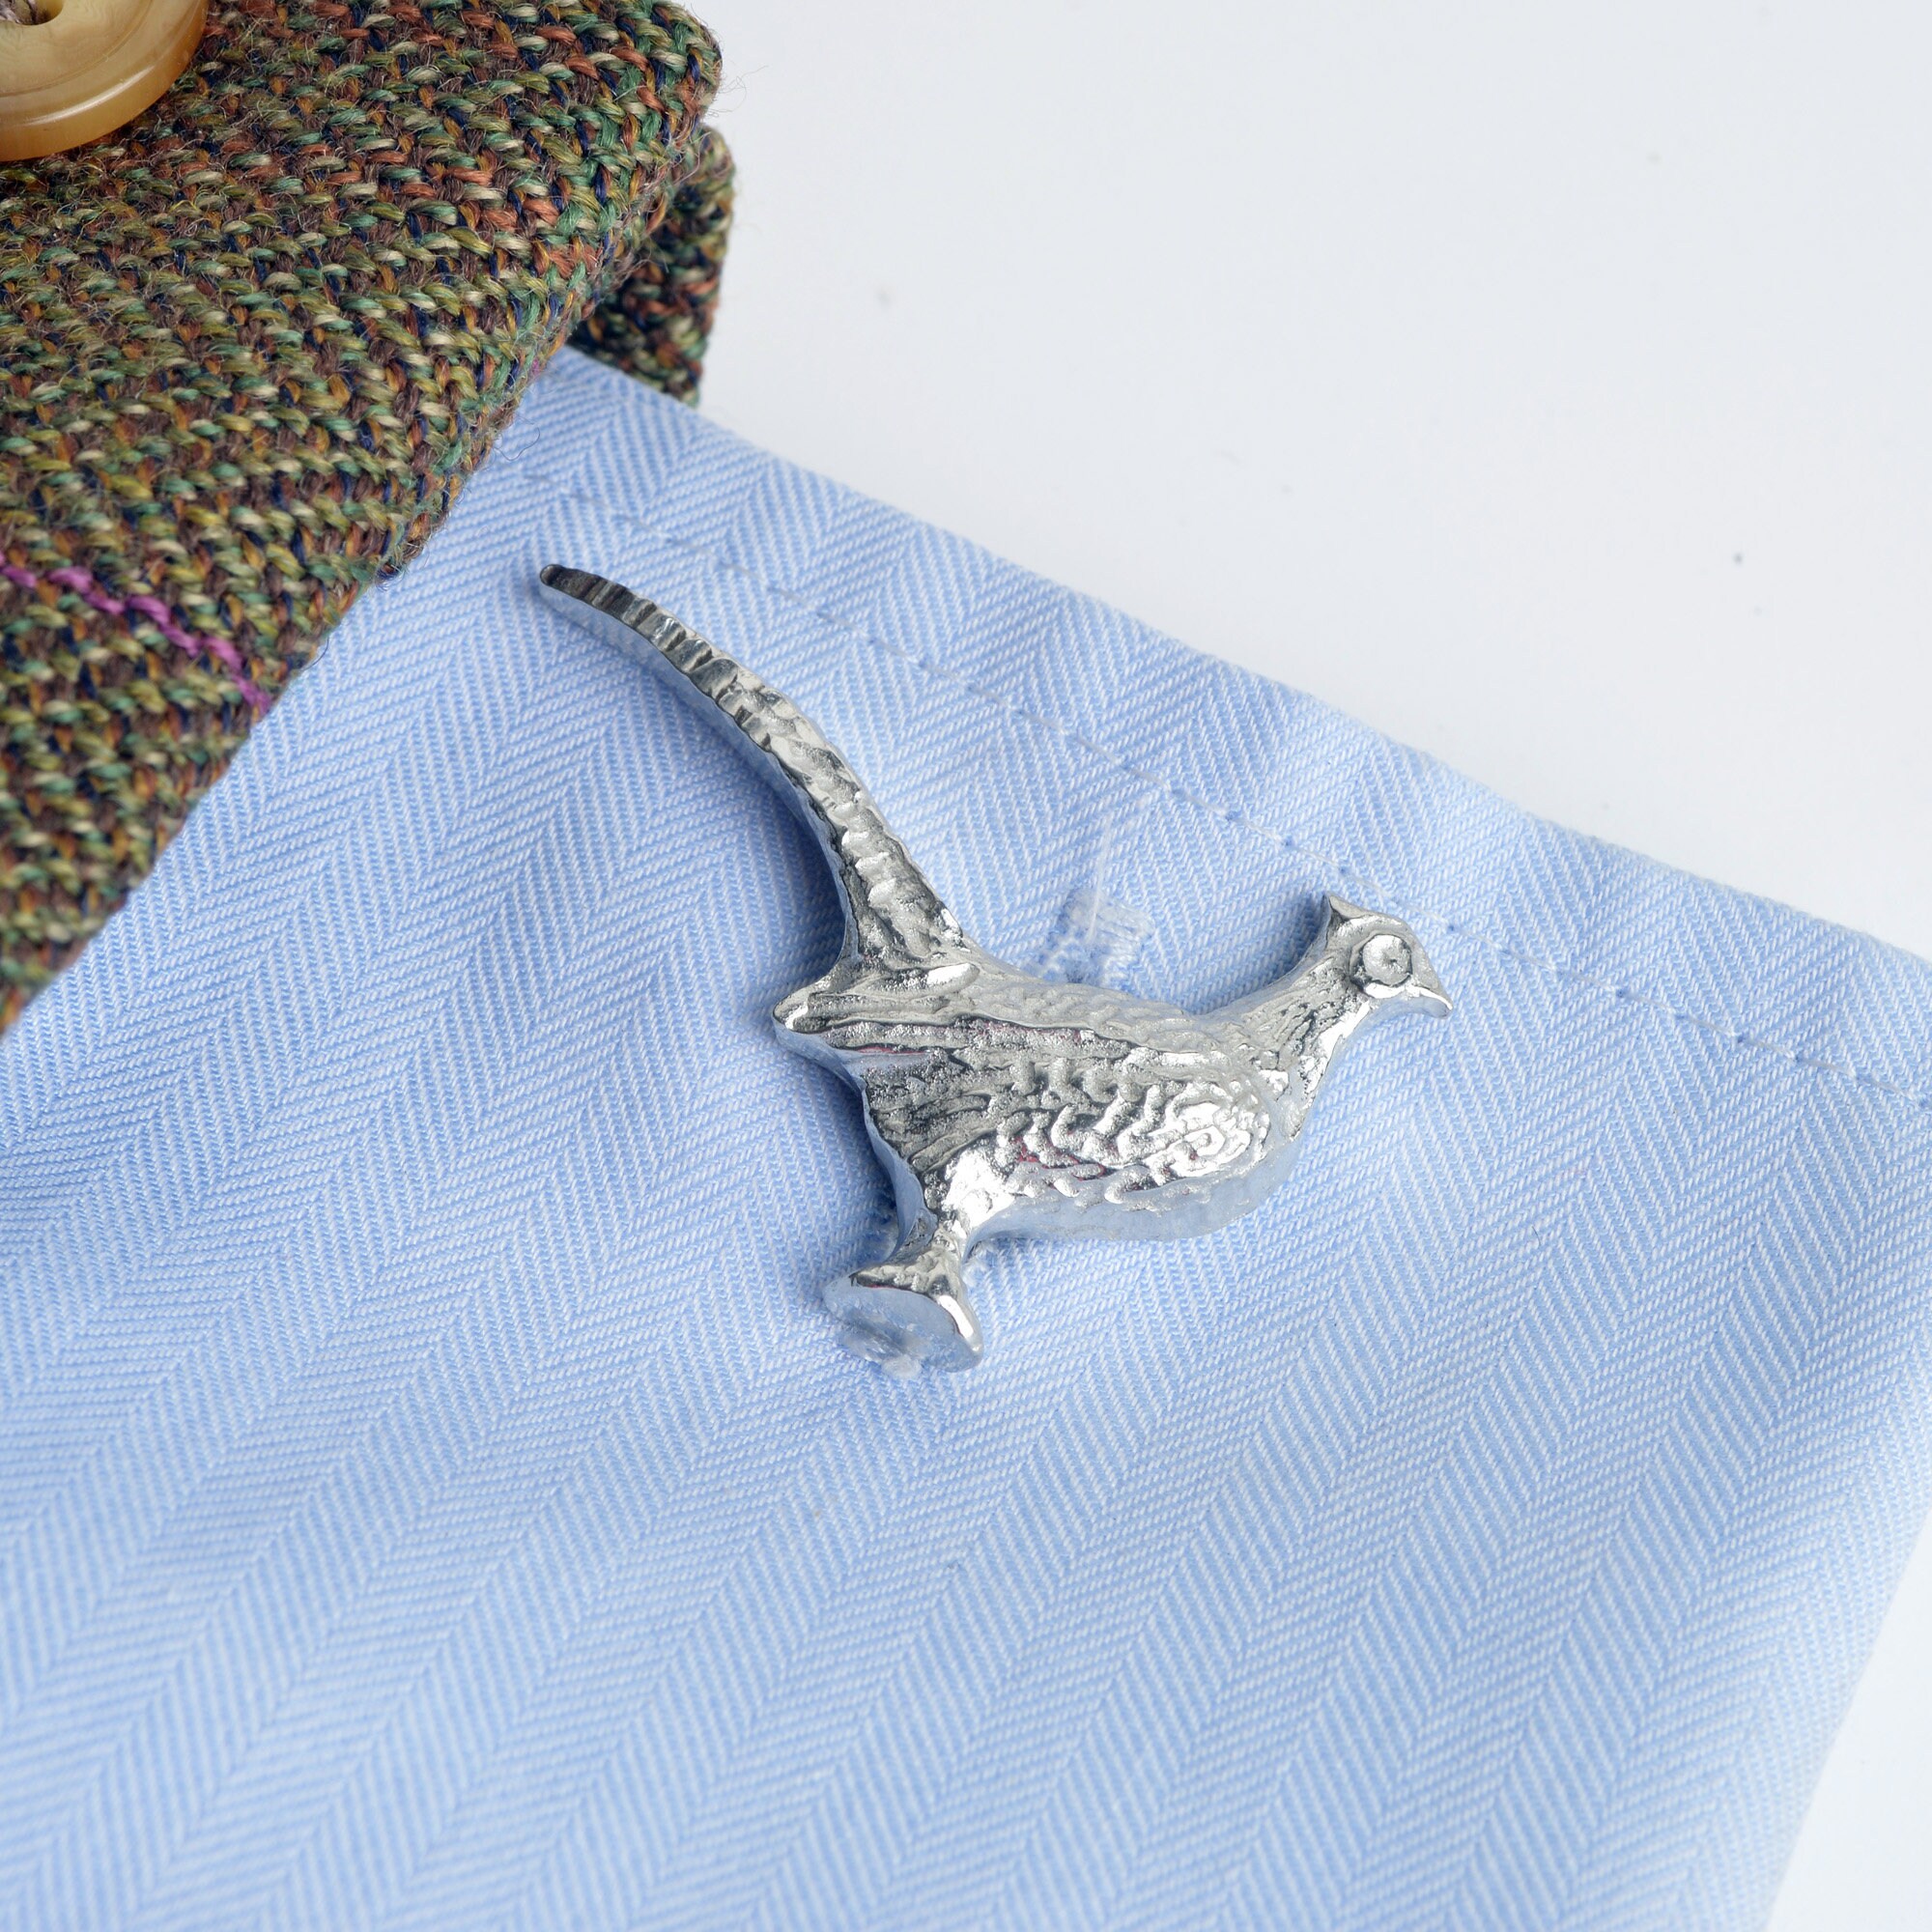 Pheasant Design *New* Gift Novelty Mens Cufflinks 